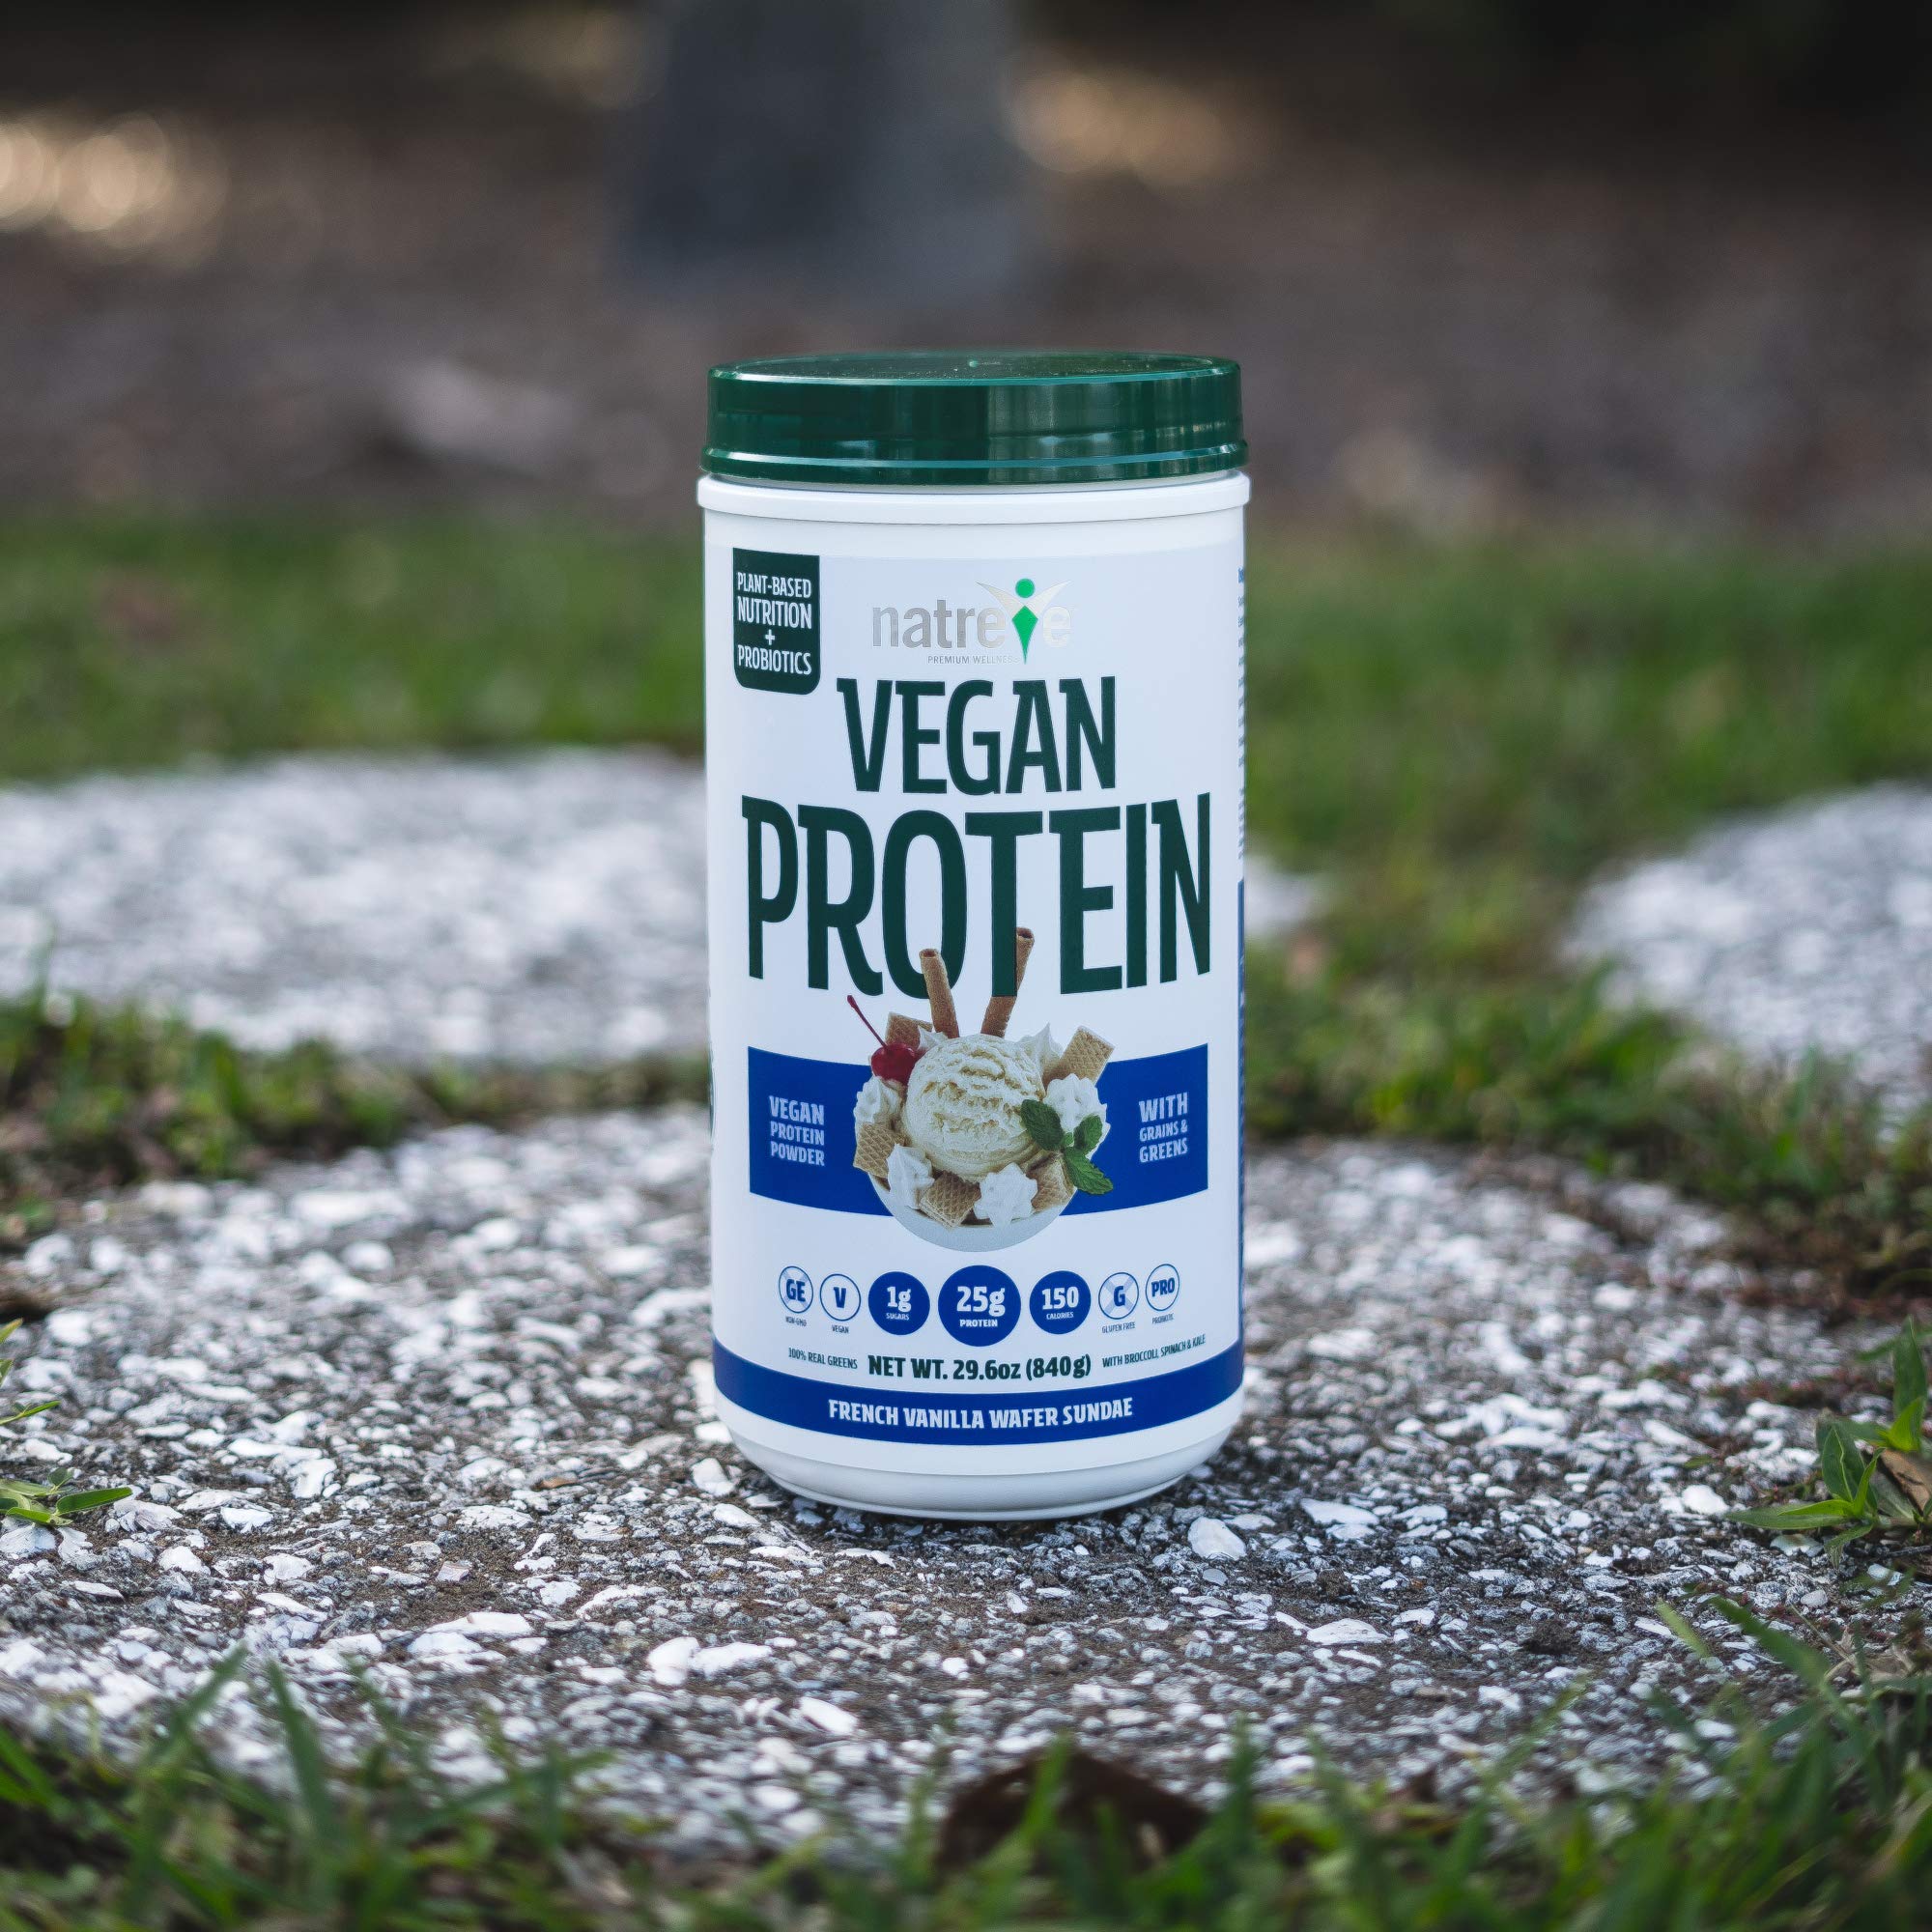 Natreve Vegan Protein Powder - Gluten Free Non-GMO Whole Food Protein with Vegetables - 30oz (French Vanilla Wafer Sundae)